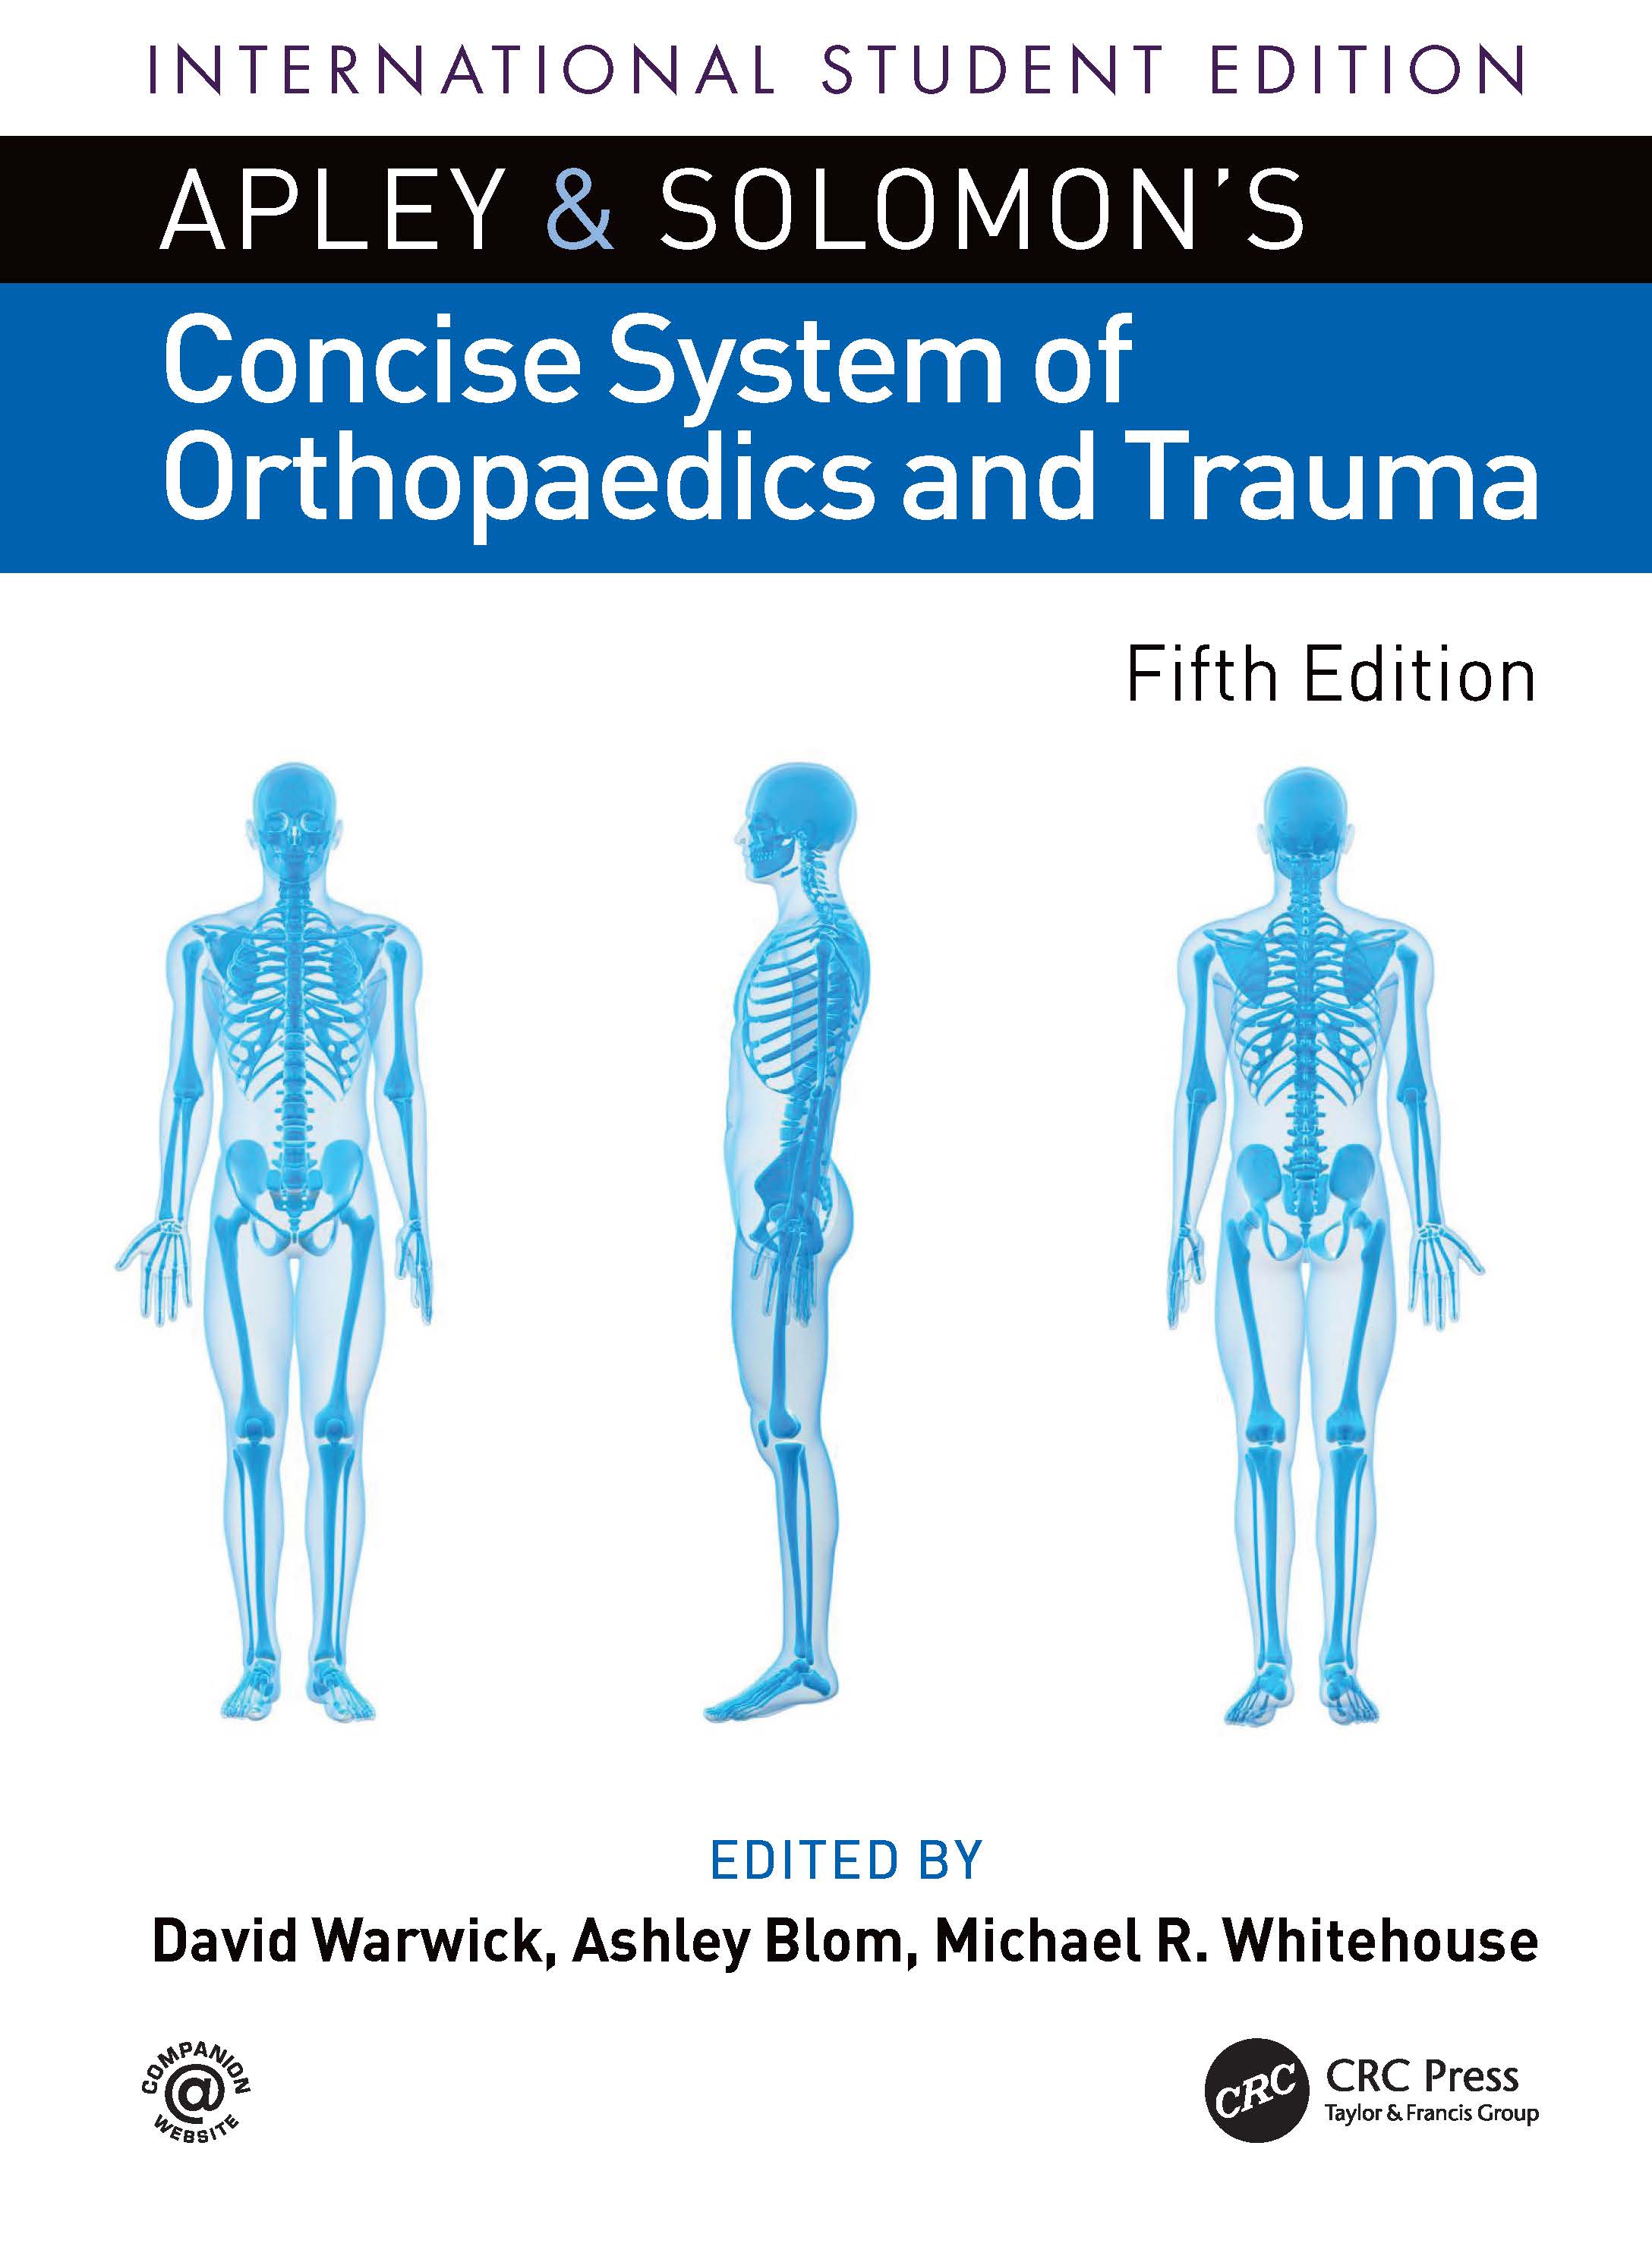 

surgical-sciences/orthopedics/apley-solomon-s-concise-systems-of-orthopedics-and-trauma-5ed--9780367481841